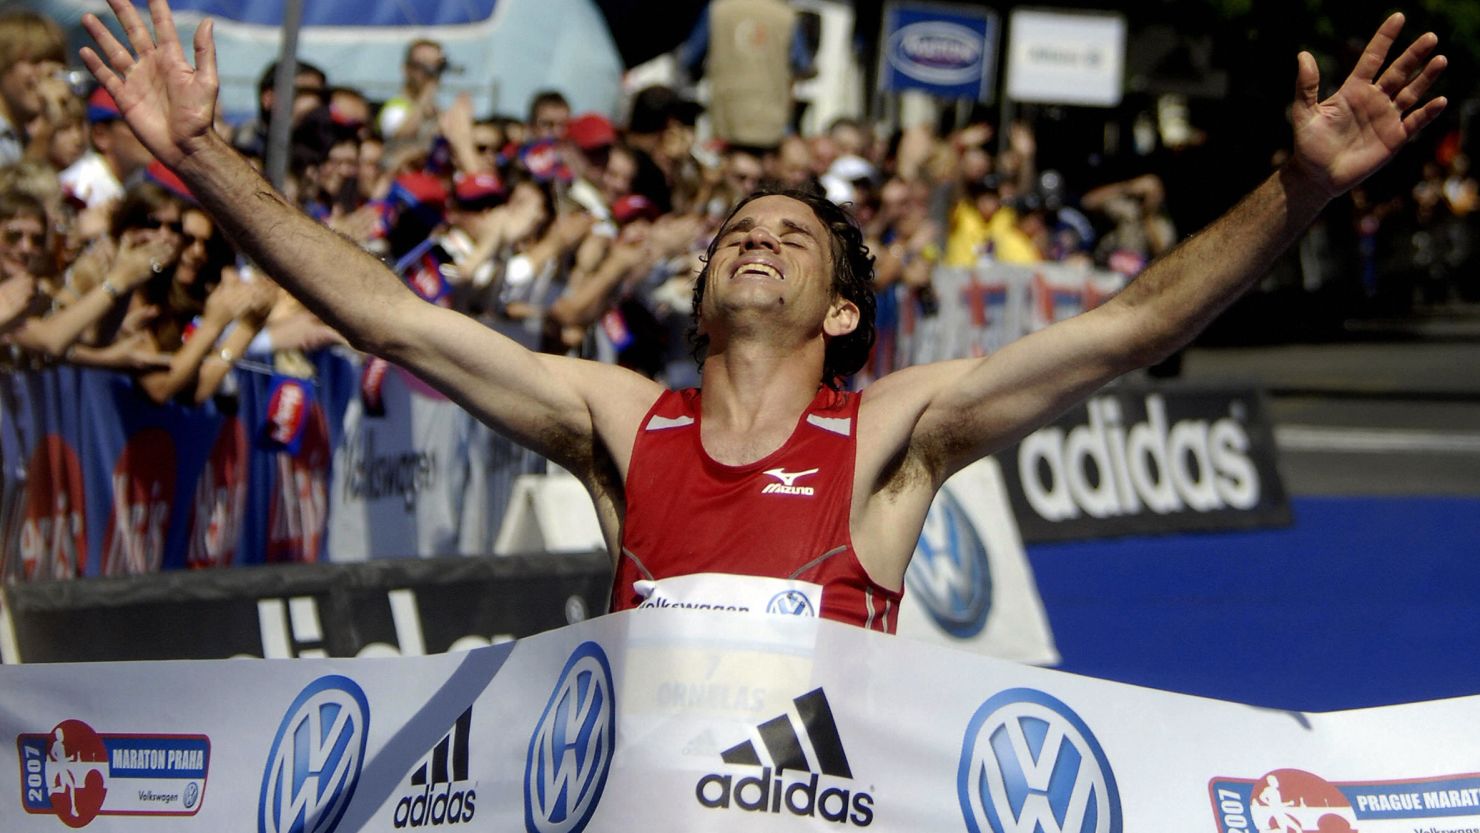 Banned Portuguese athlete Helder Ornelas crosses the line after winning the Prague Marathon in 2007. 